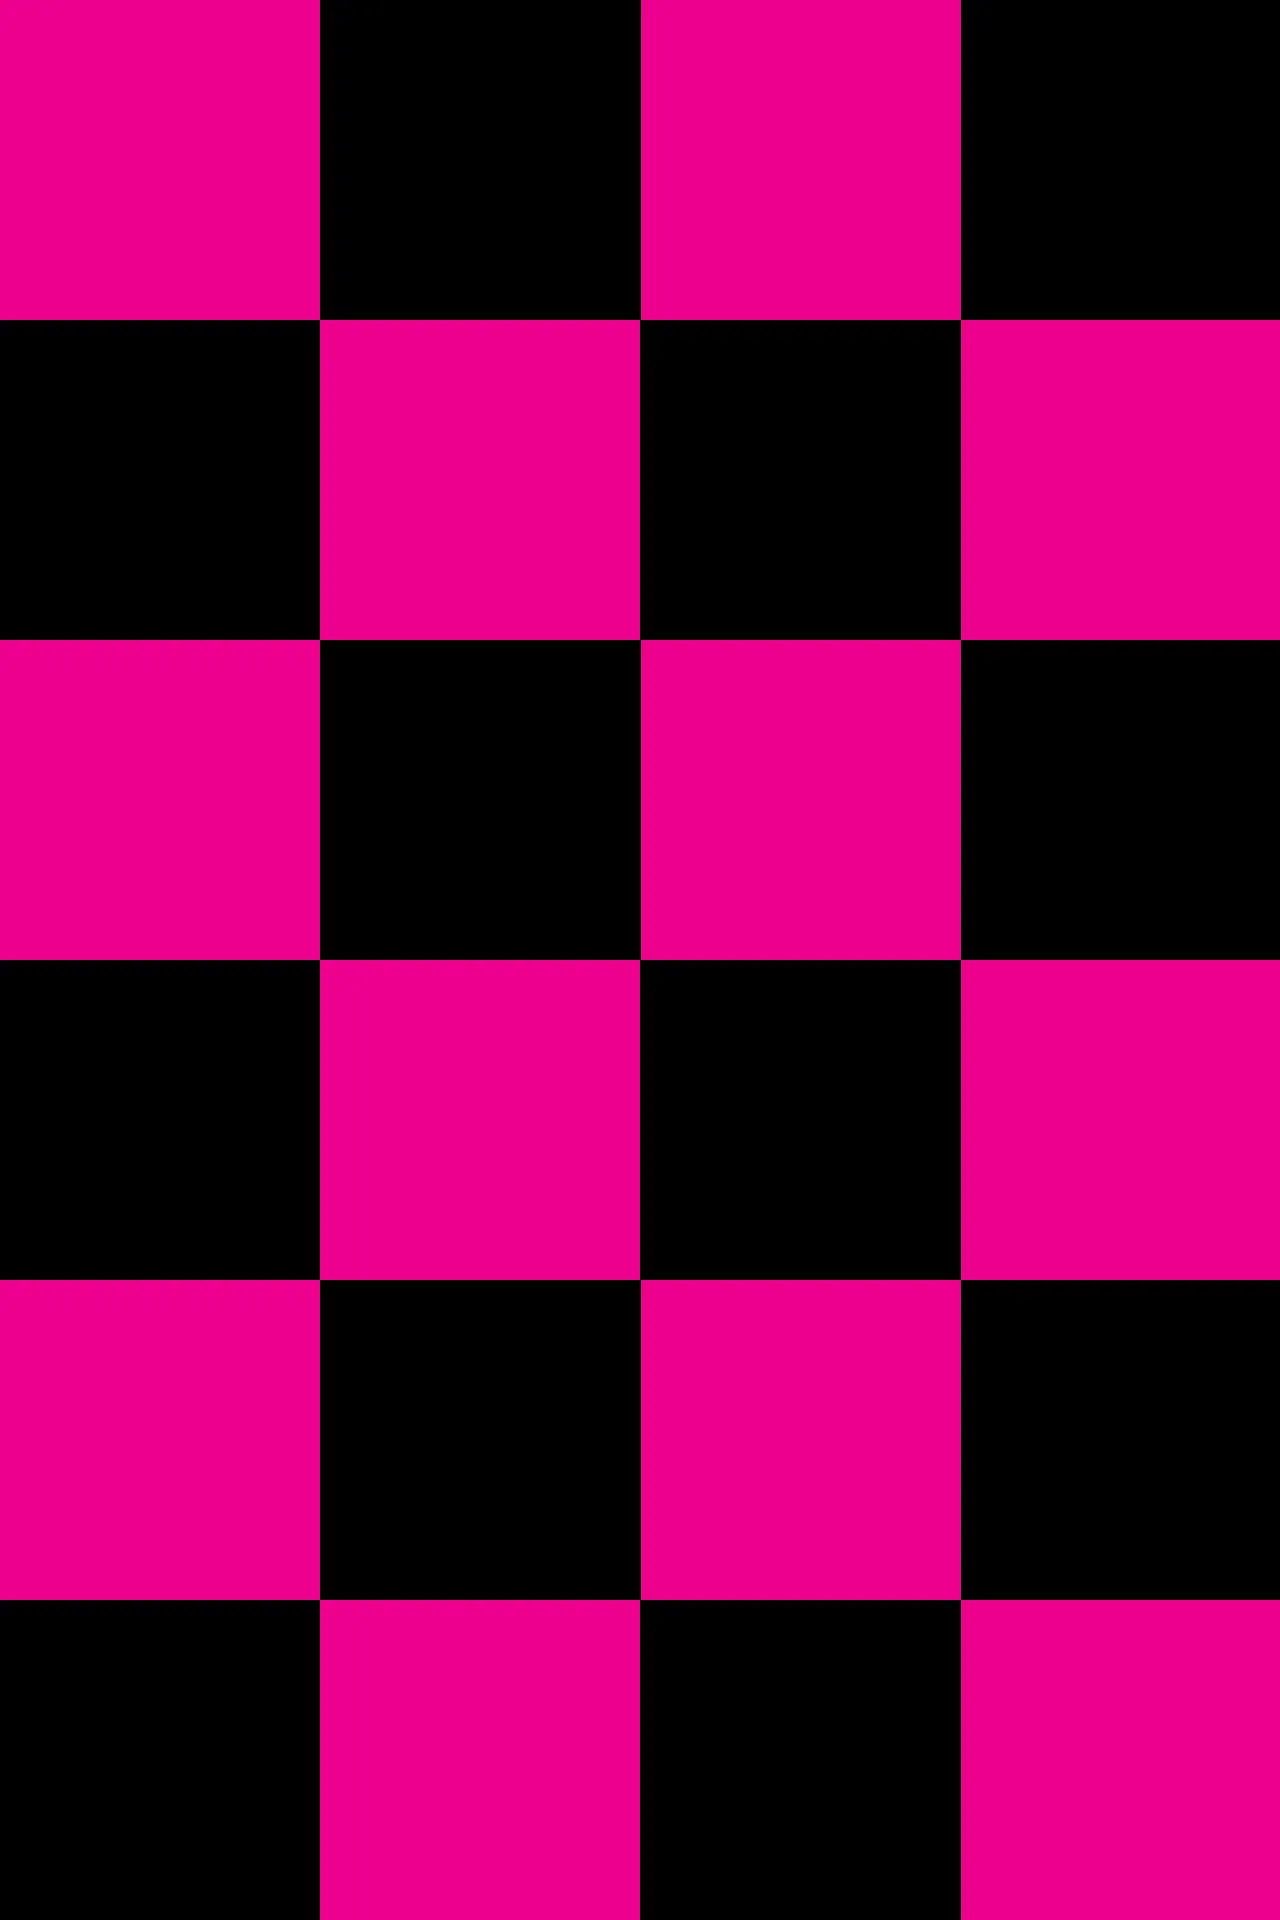 Pink and black grid image